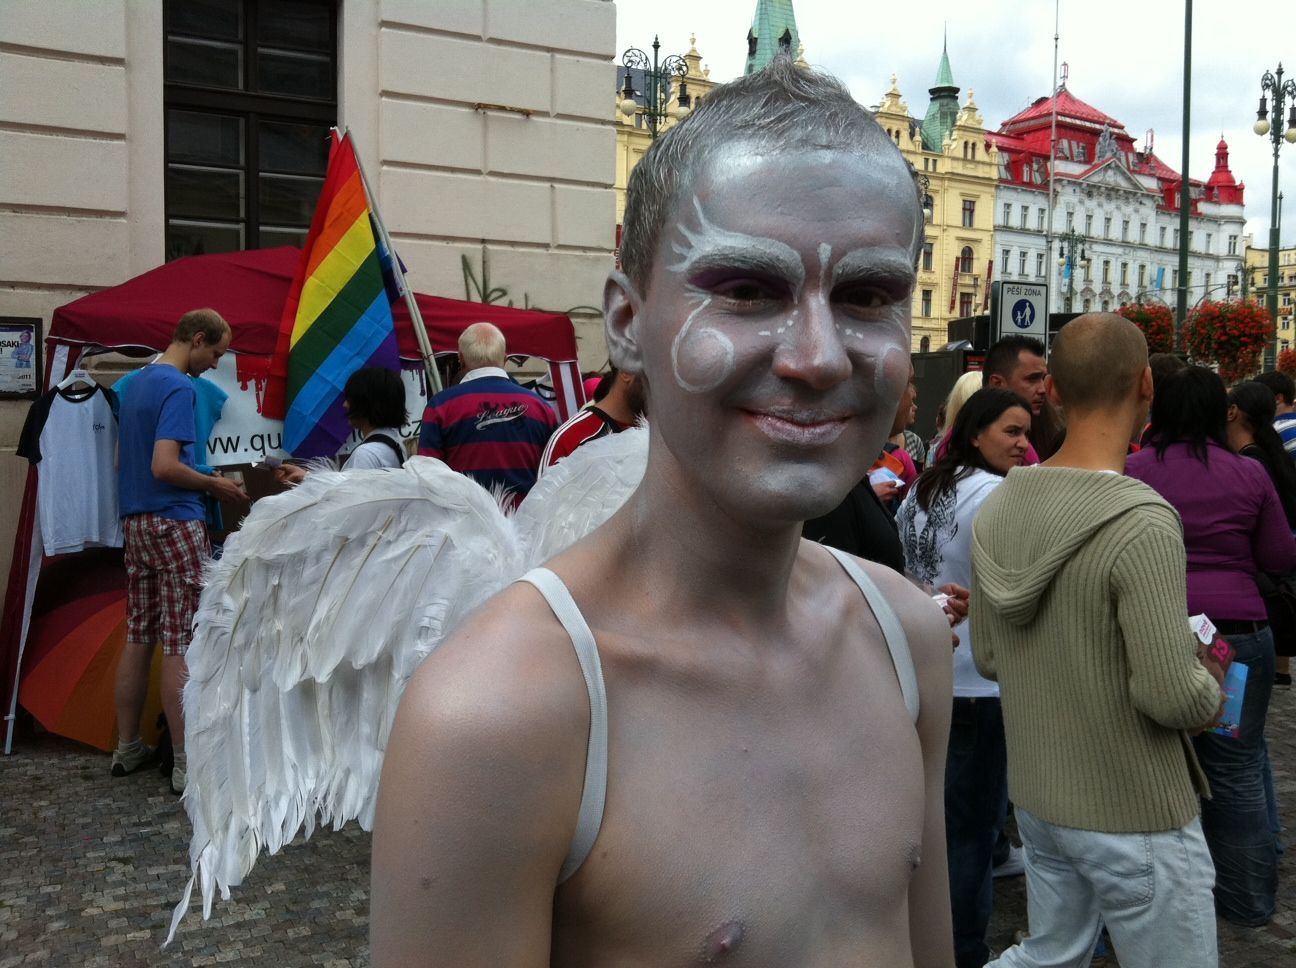 Prague Pride 2011